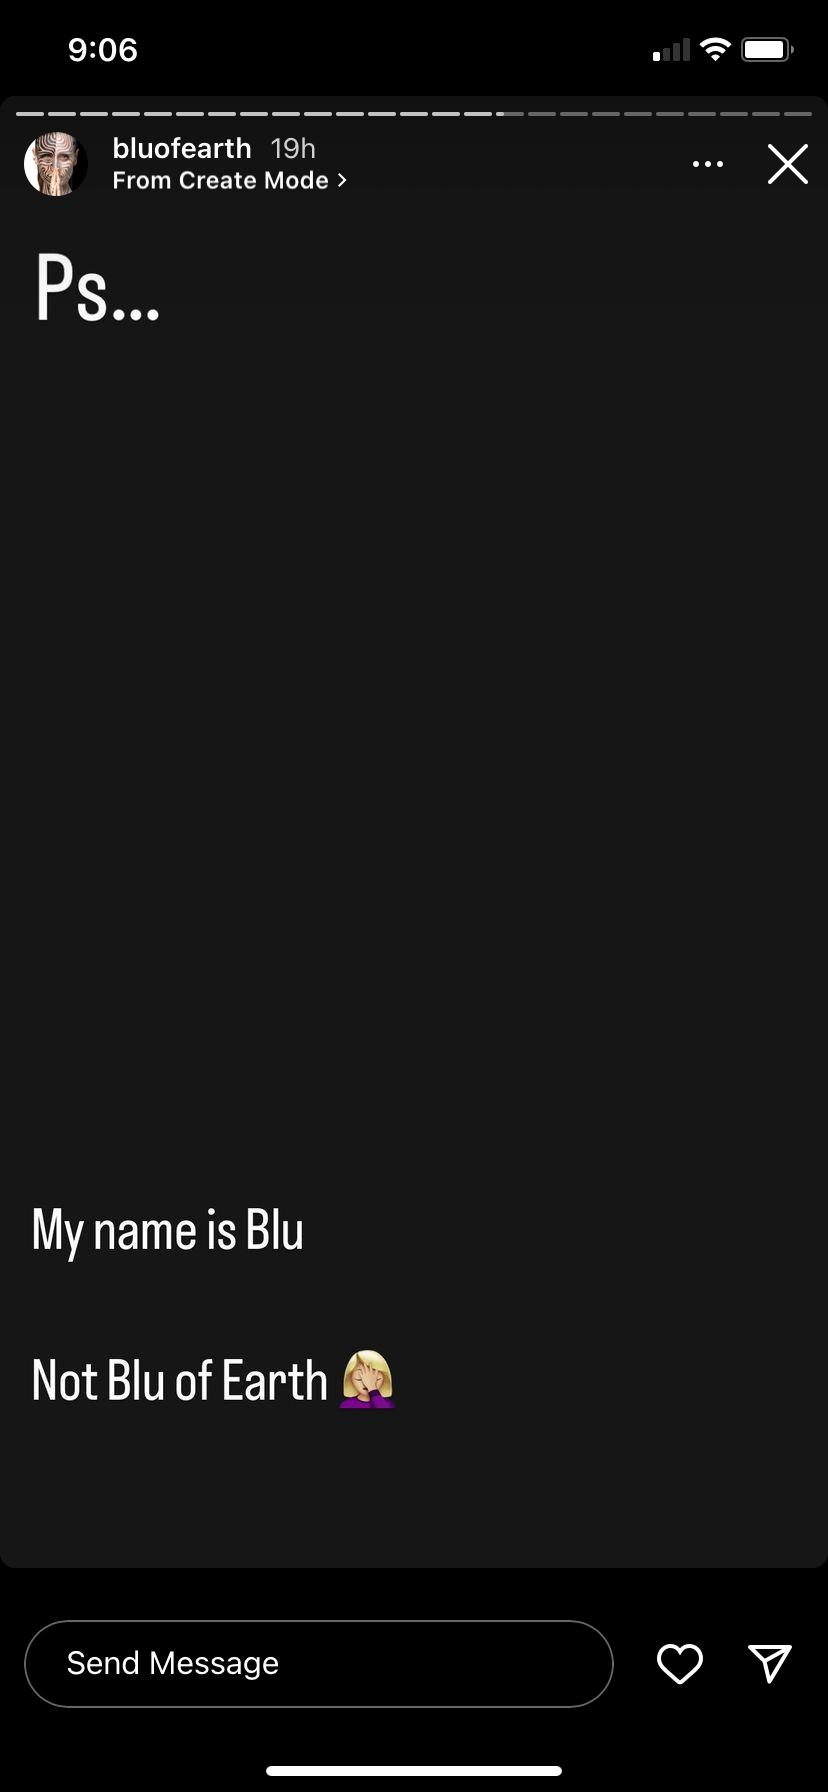 //Blu